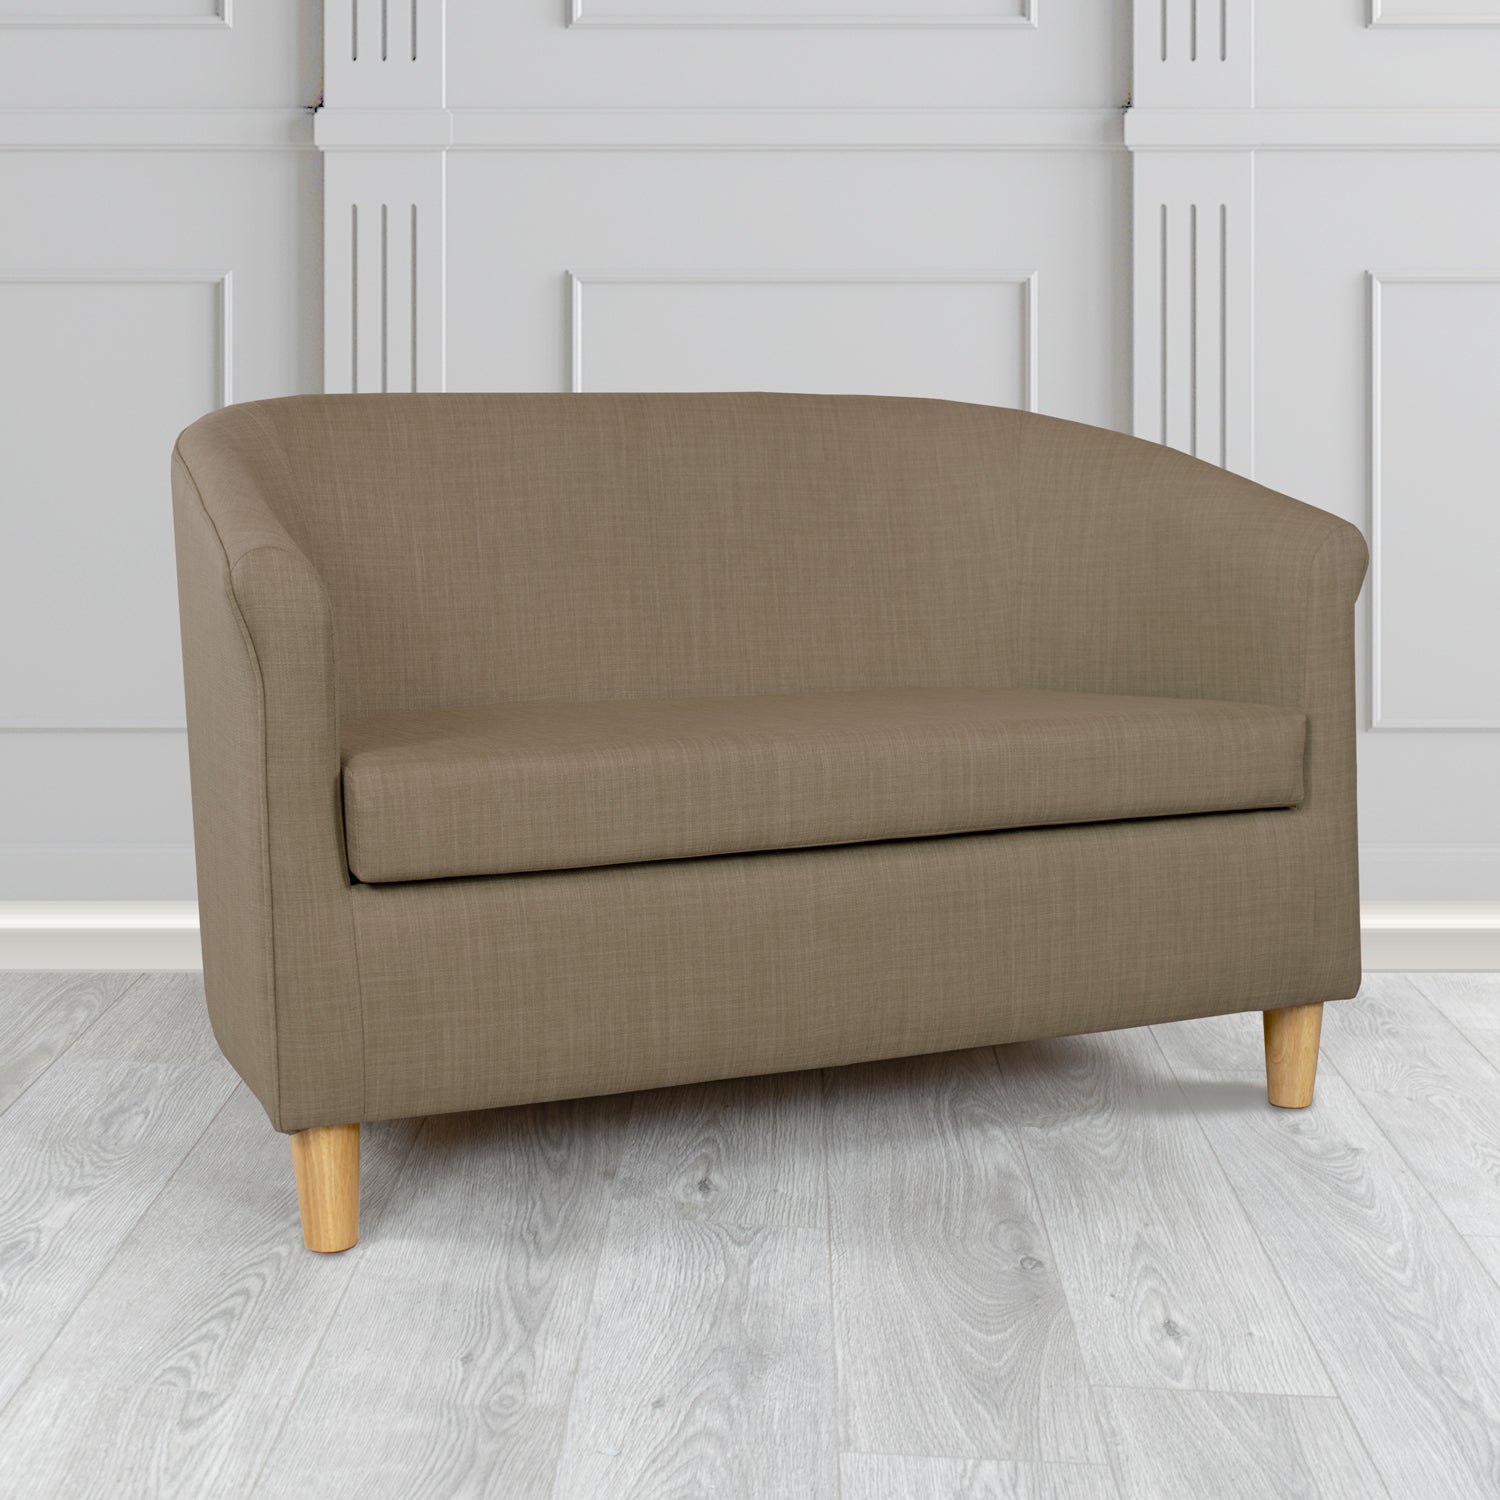 Tuscany Charles Nutmeg Plain Linen Fabric 2 Seater Tub Sofa - The Tub Chair Shop